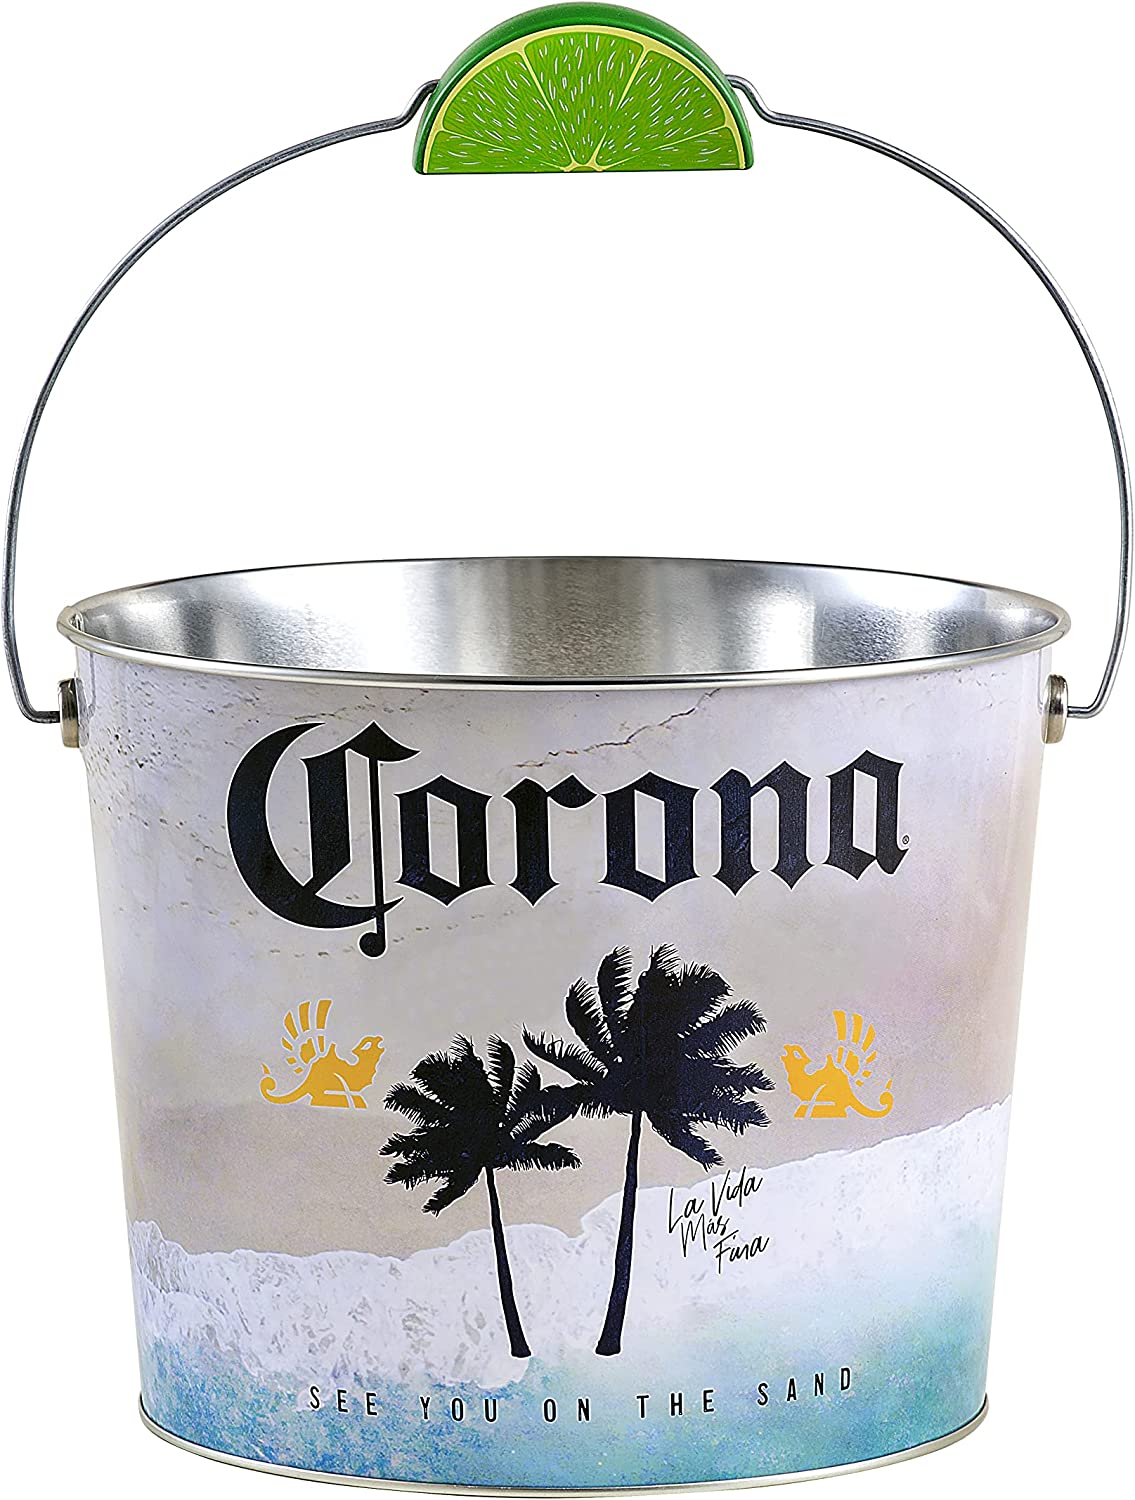 Corona Extra Galvanized Beer Bucket